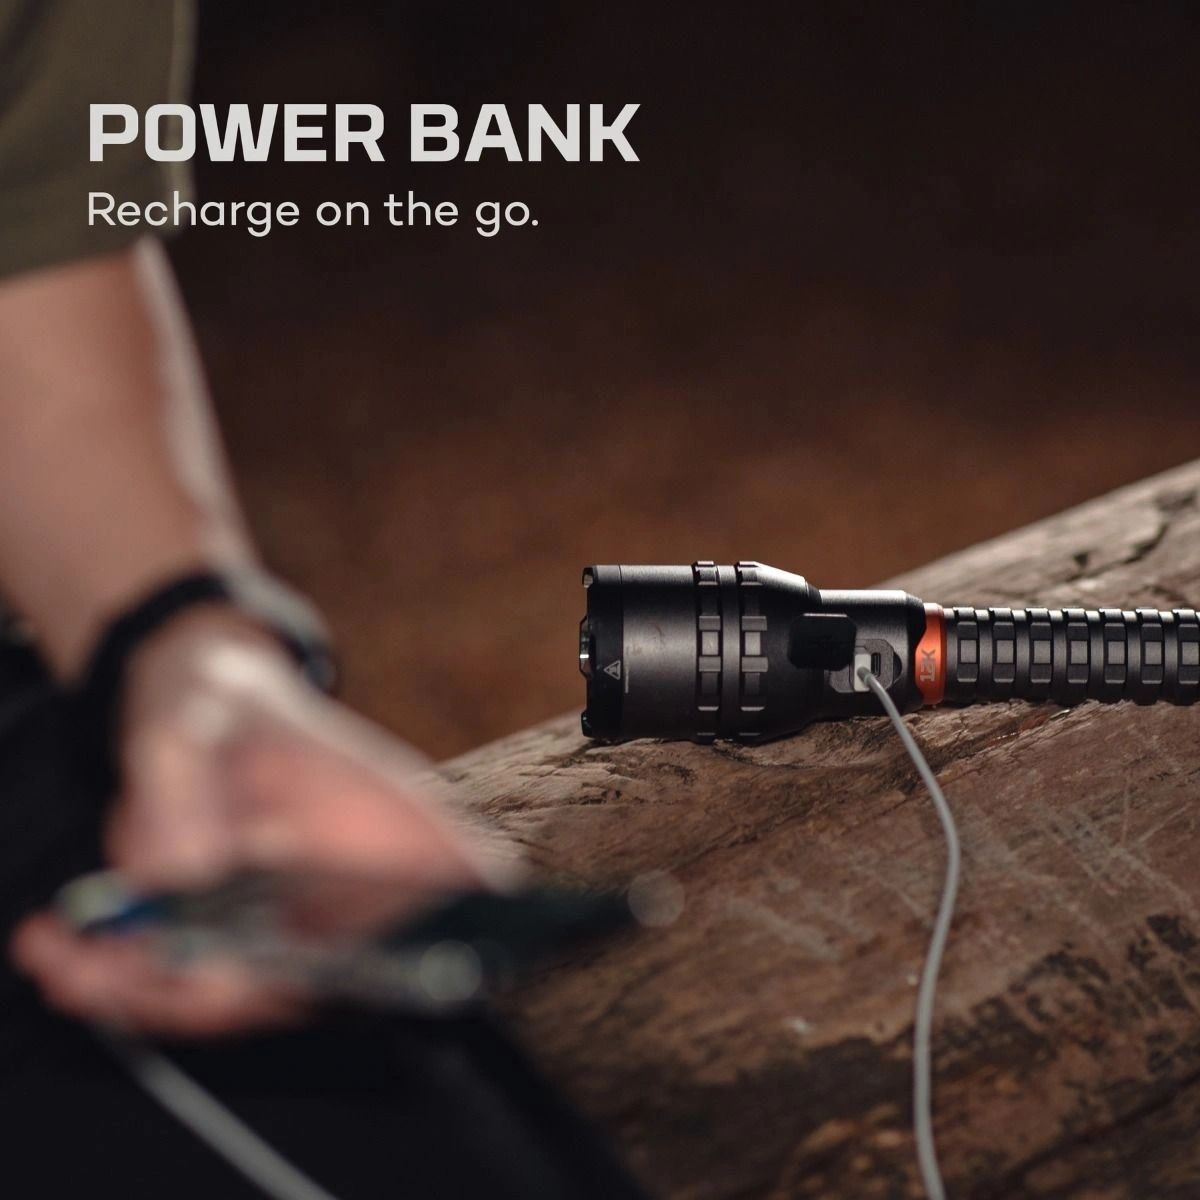 12K 12,000 Lumen USB-C Rechargeable Flashlight with Power Bank